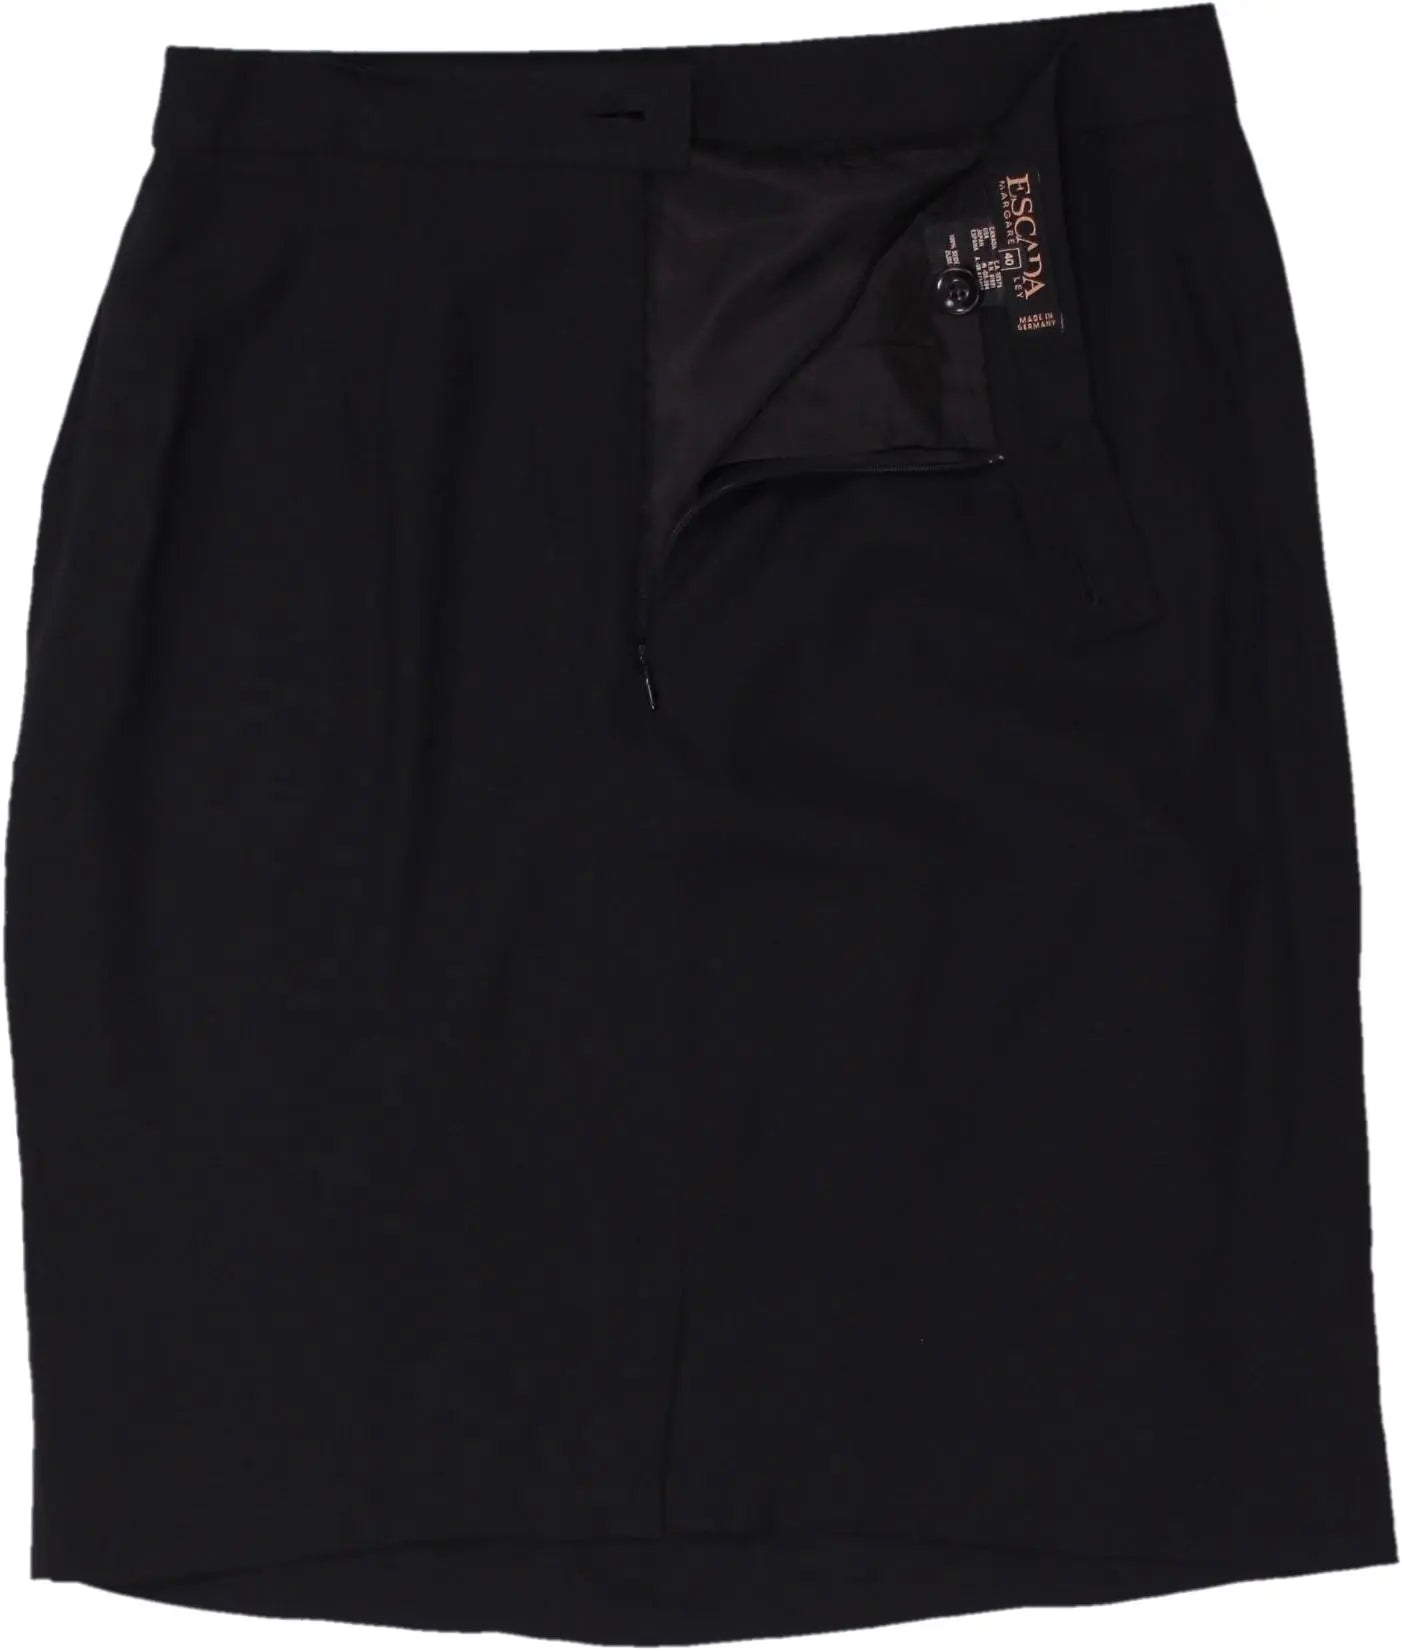 Escada - Black 100% Silk Skirt by Escada- ThriftTale.com - Vintage and second handclothing